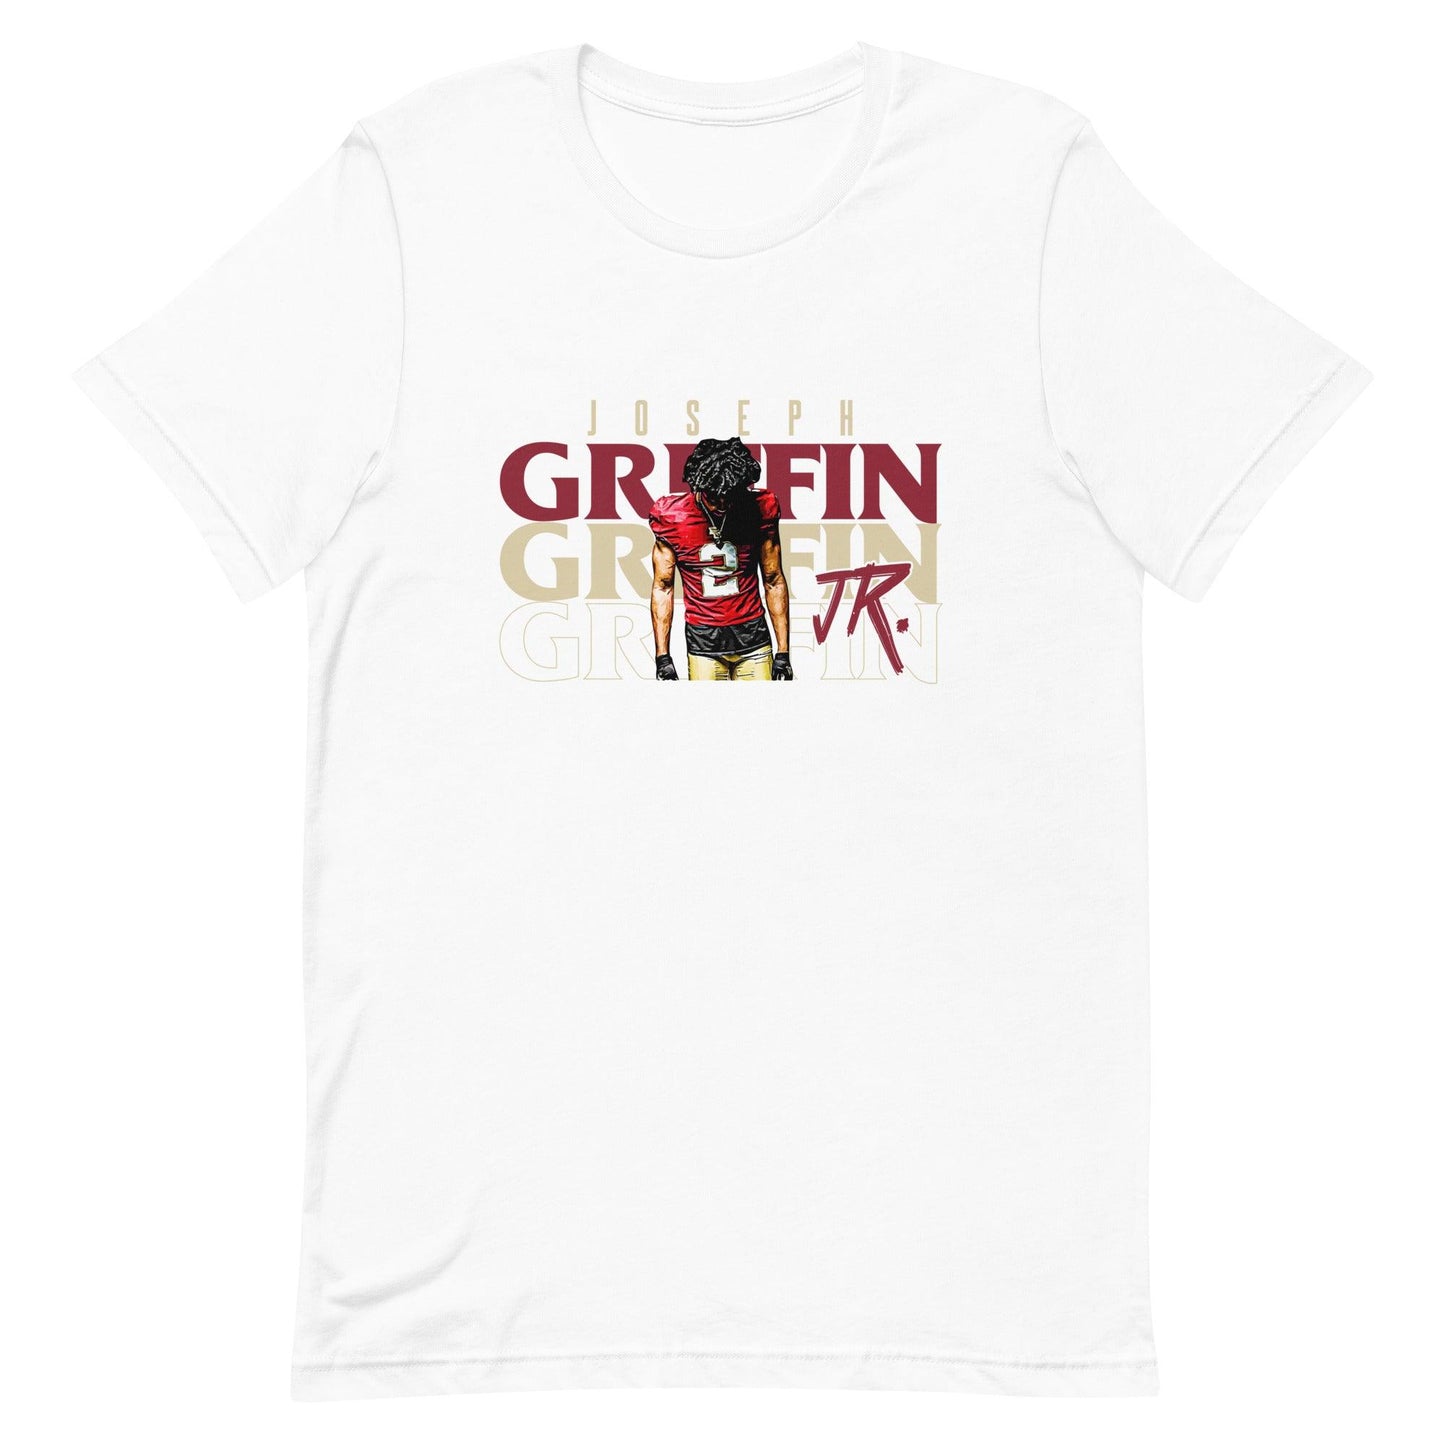 Joseph Griffin Jr. "Gameday" t-shirt - Fan Arch